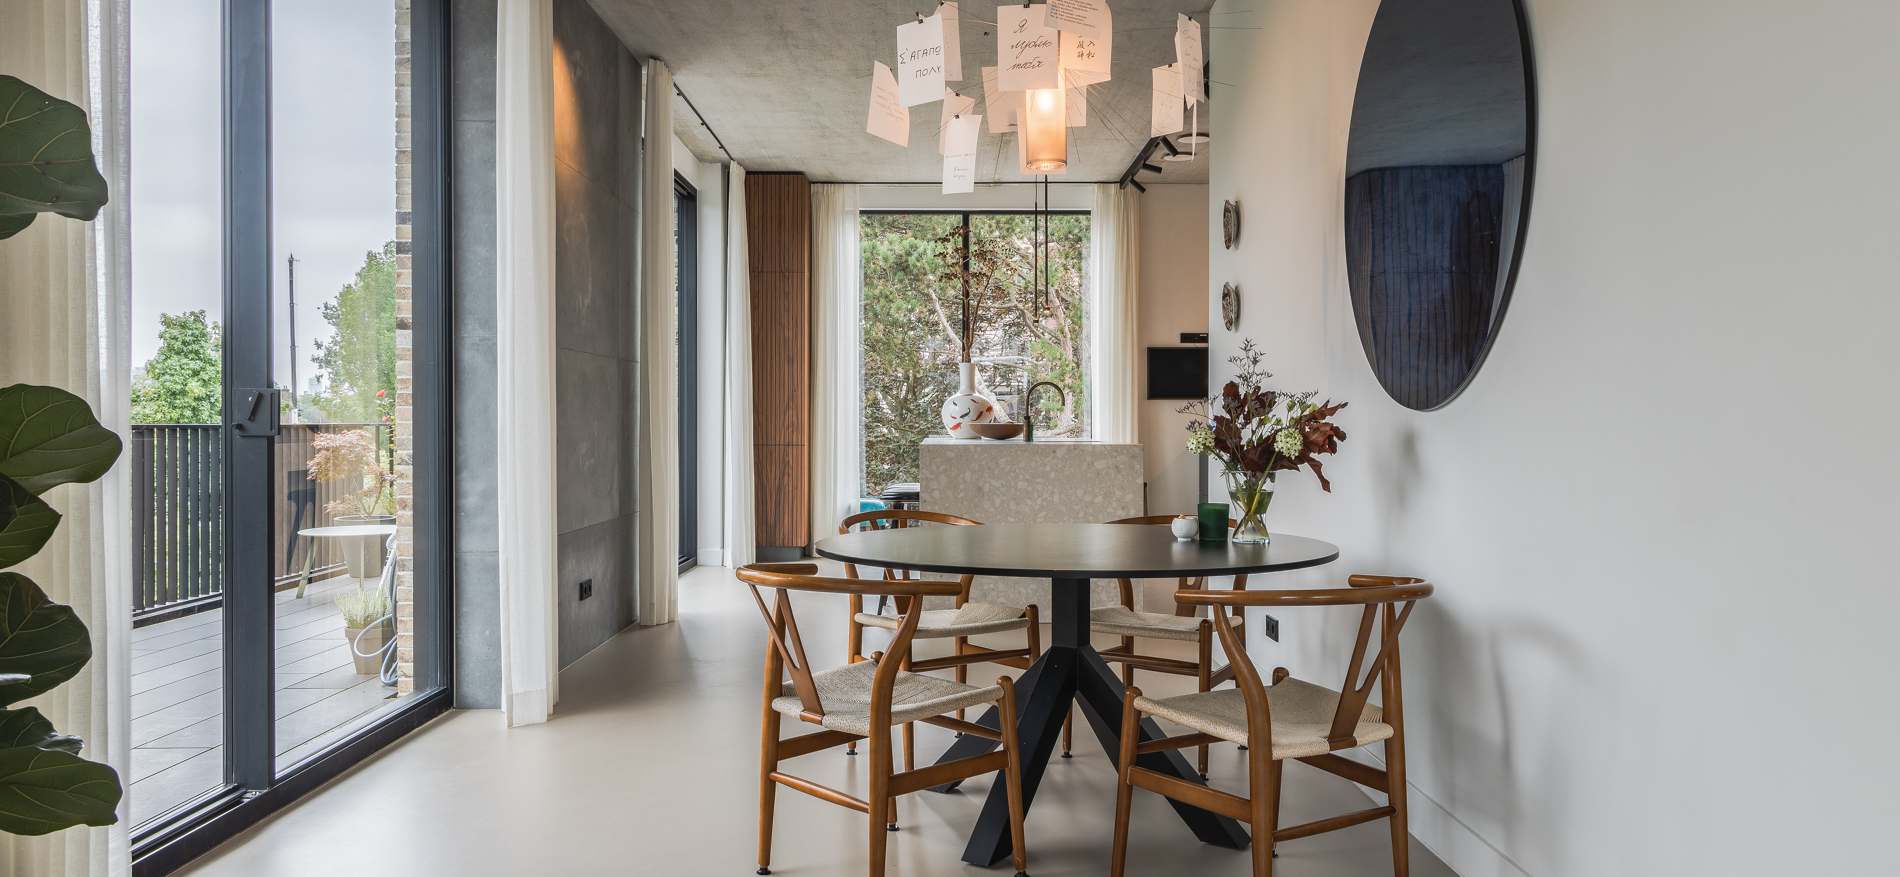 Residential house furnishing | Amsterdam (NL) - Residential Interior Design